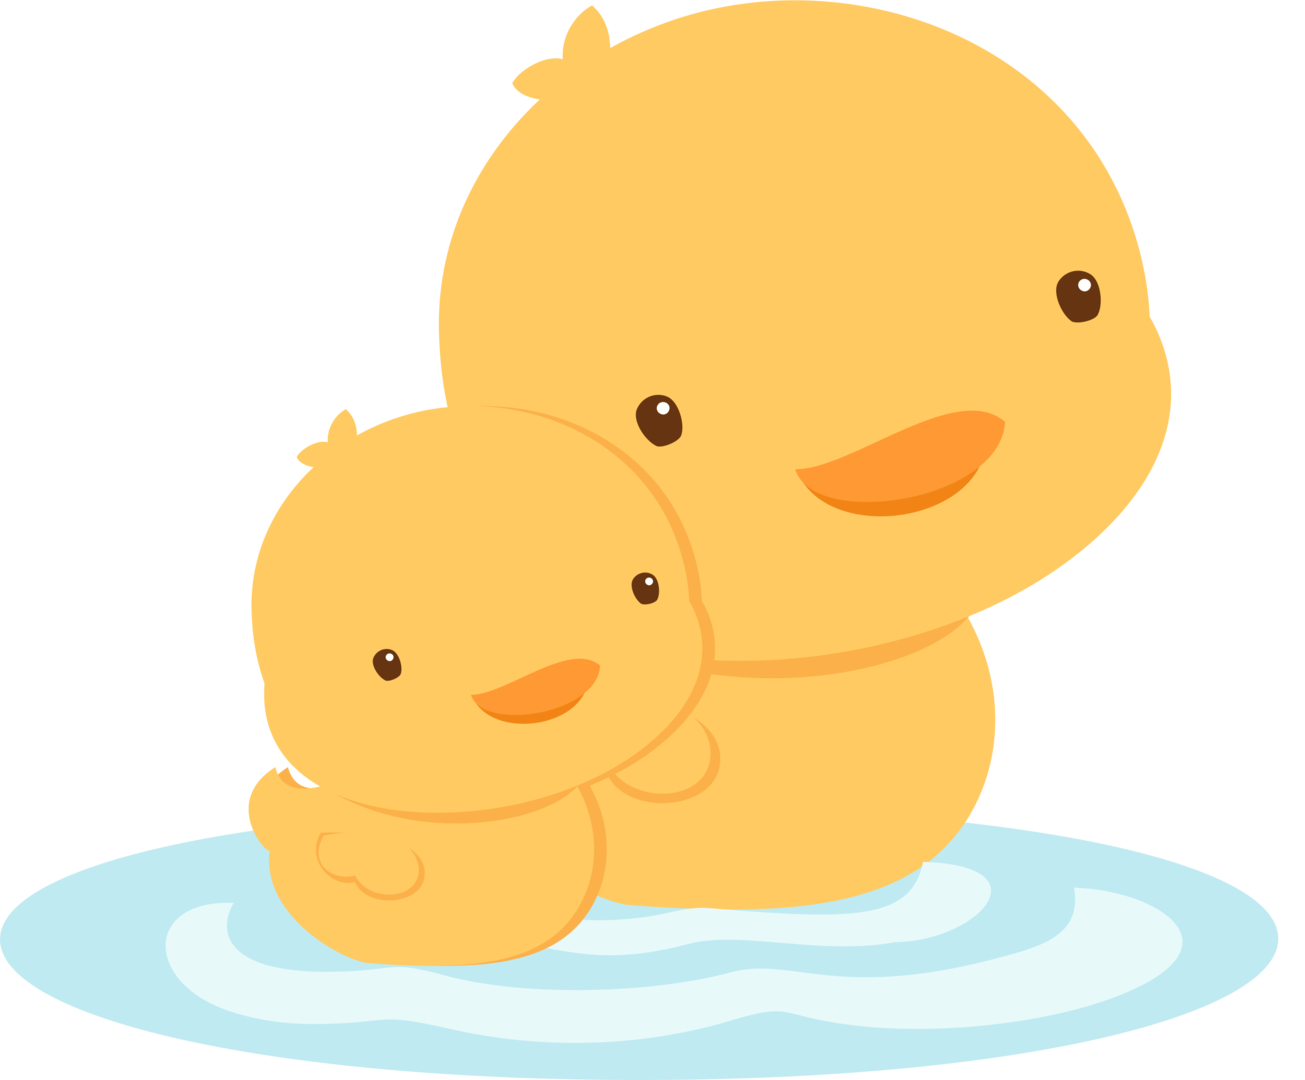 Cute Ducklings Cartoon Illustration PNG